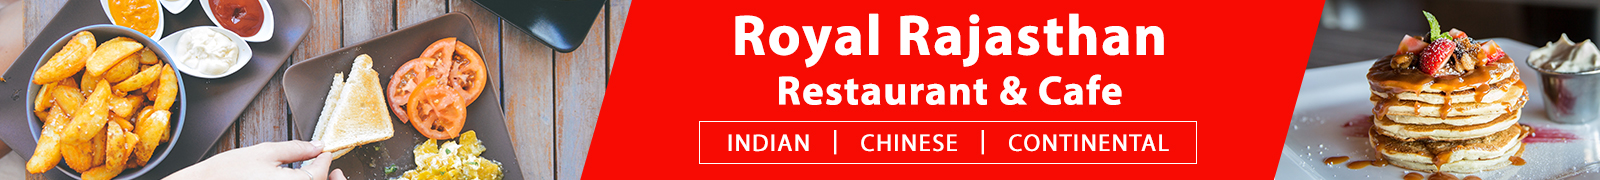 royal rajasthan restaurant & cafe